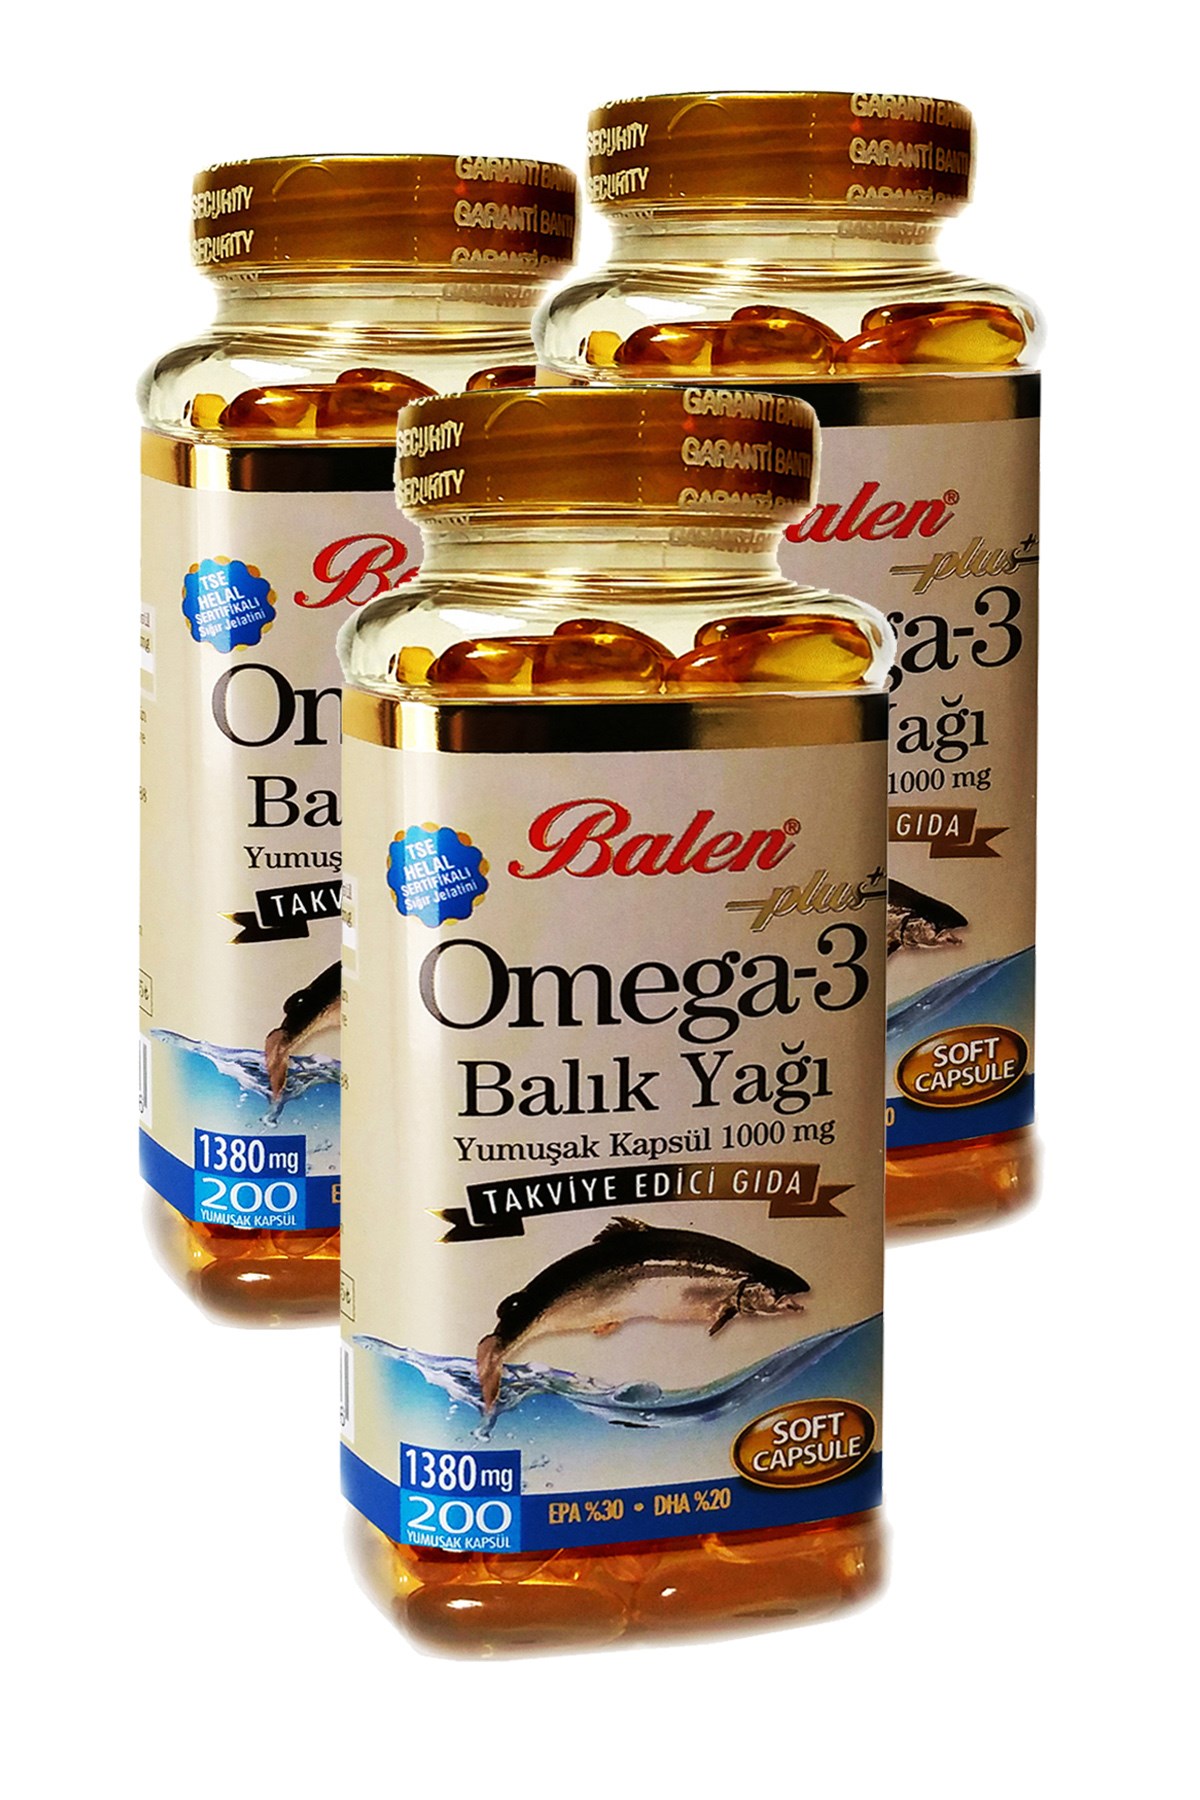 3 Kutu Balen Omega 3 Balık Yağı Fish Oil Omega3 200 Kapsül x 1380 Mg x 3